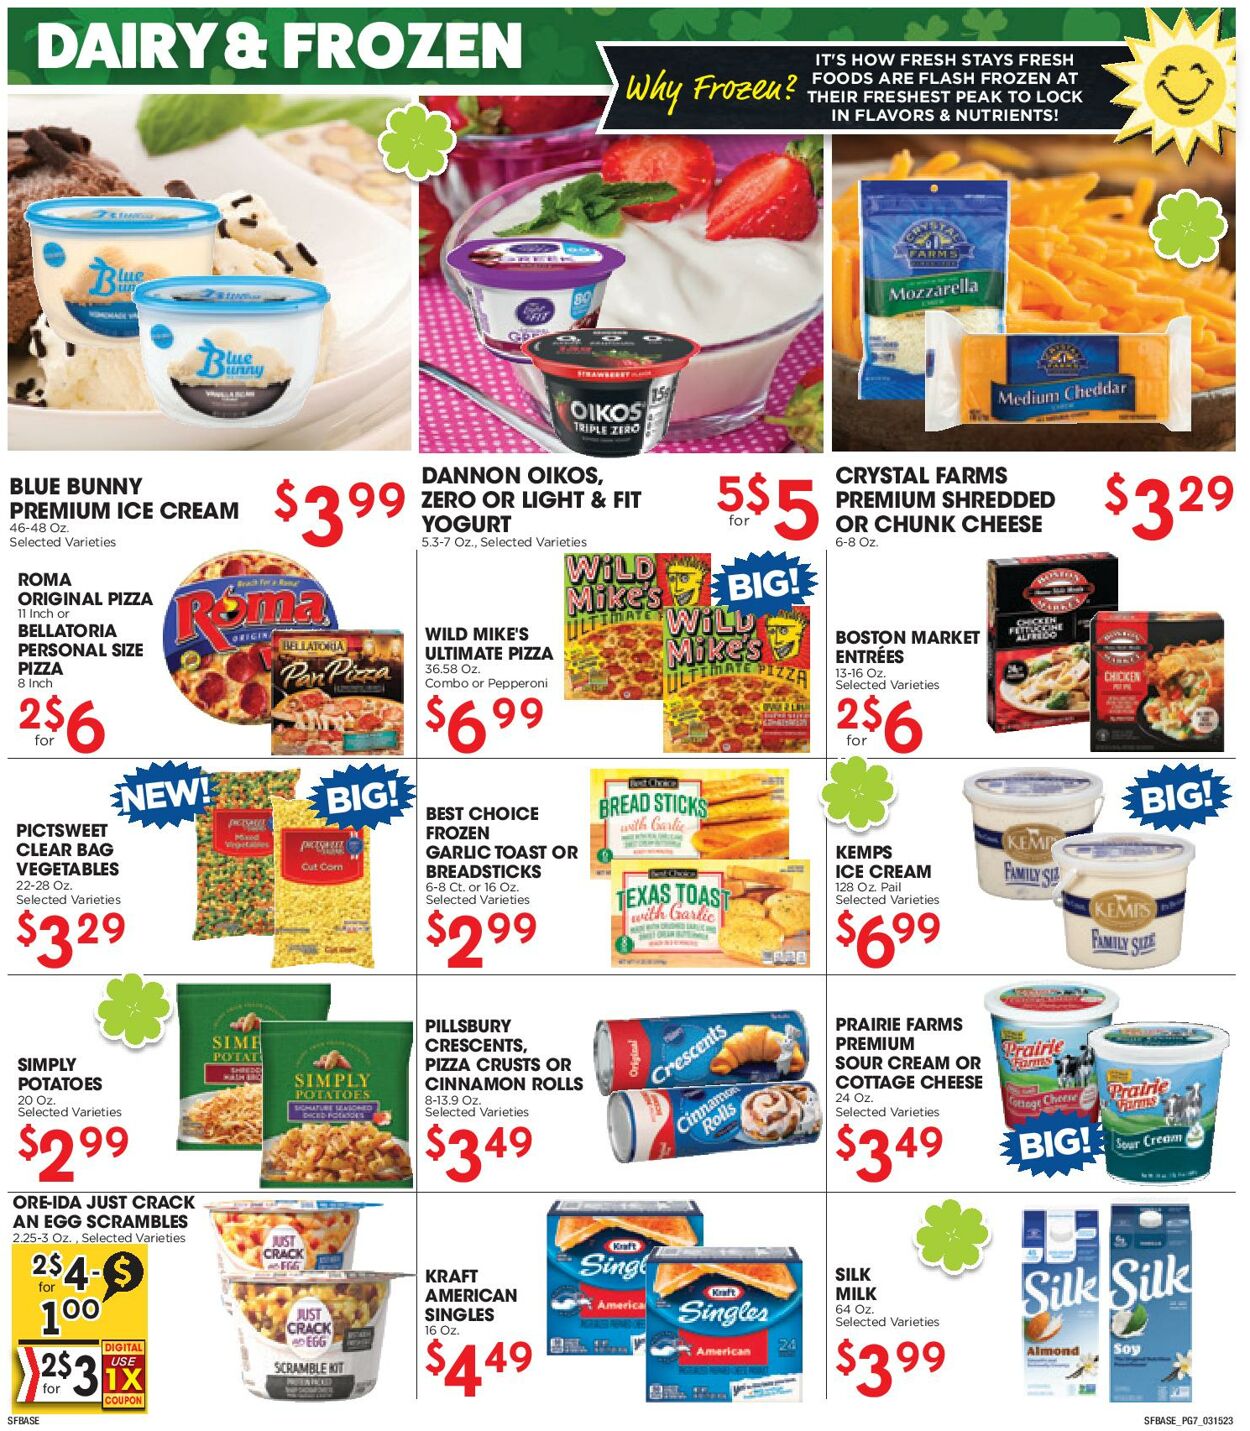 Weekly ad Sunshine Foods 03/15/2023 - 03/21/2023